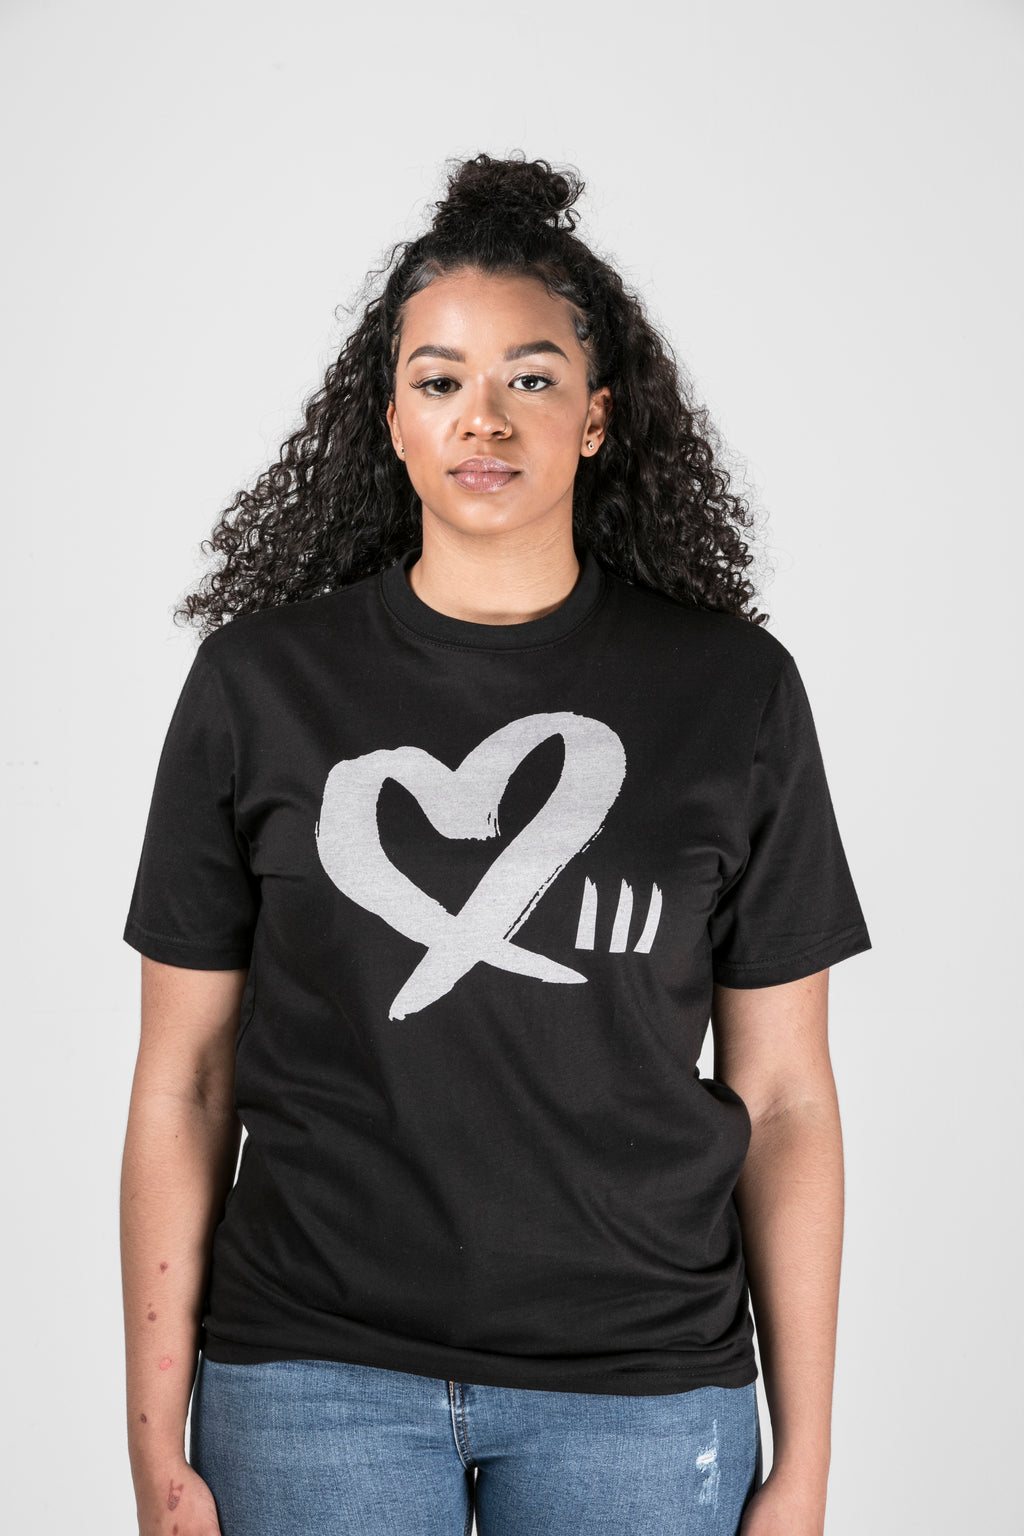 All Black Large Logo Wild Heart Unisex T-Shirt